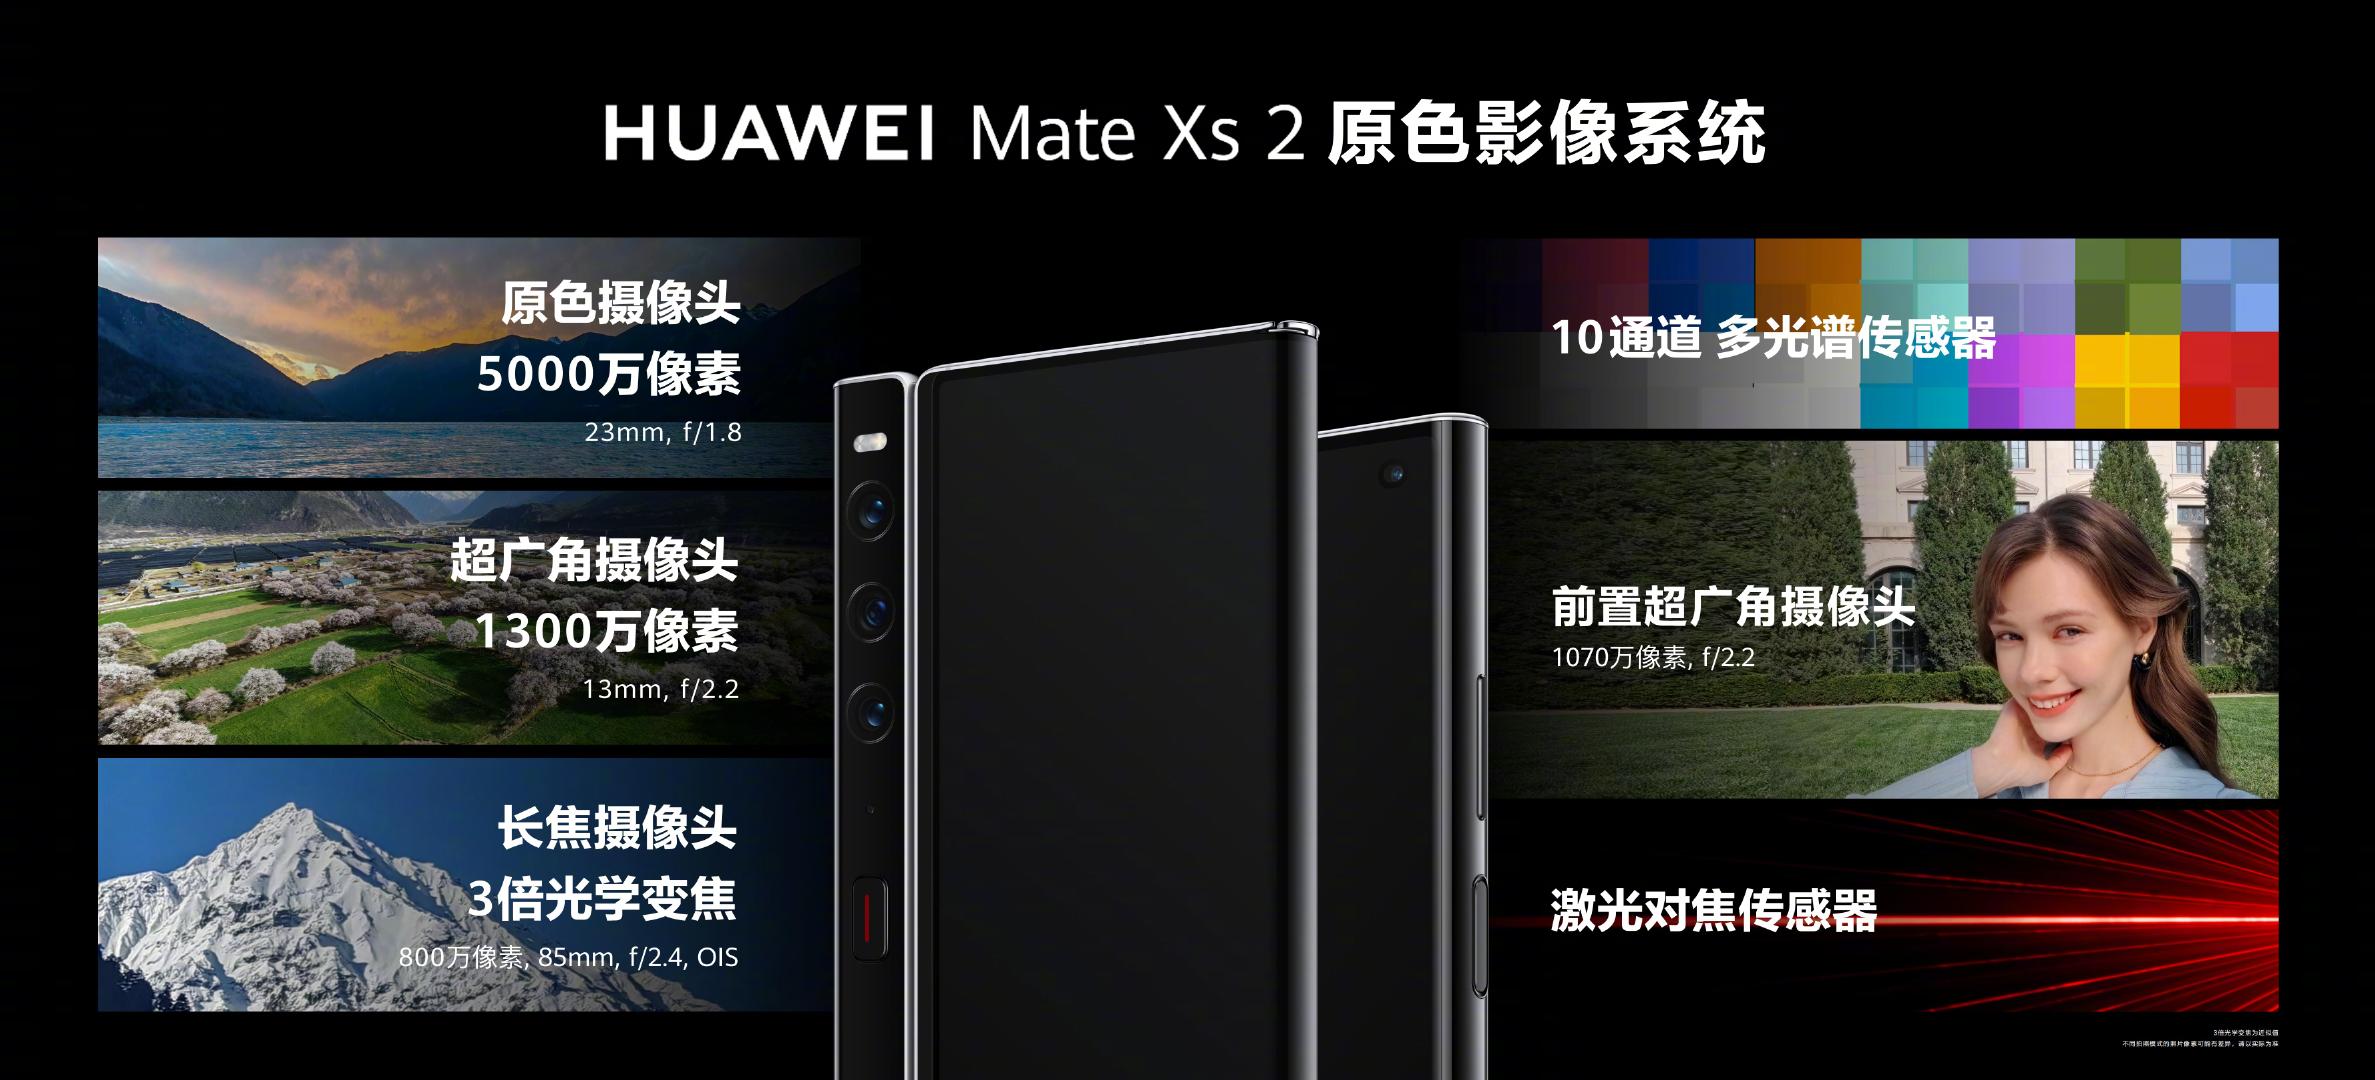 Huawei Mate Xs 2 Spec